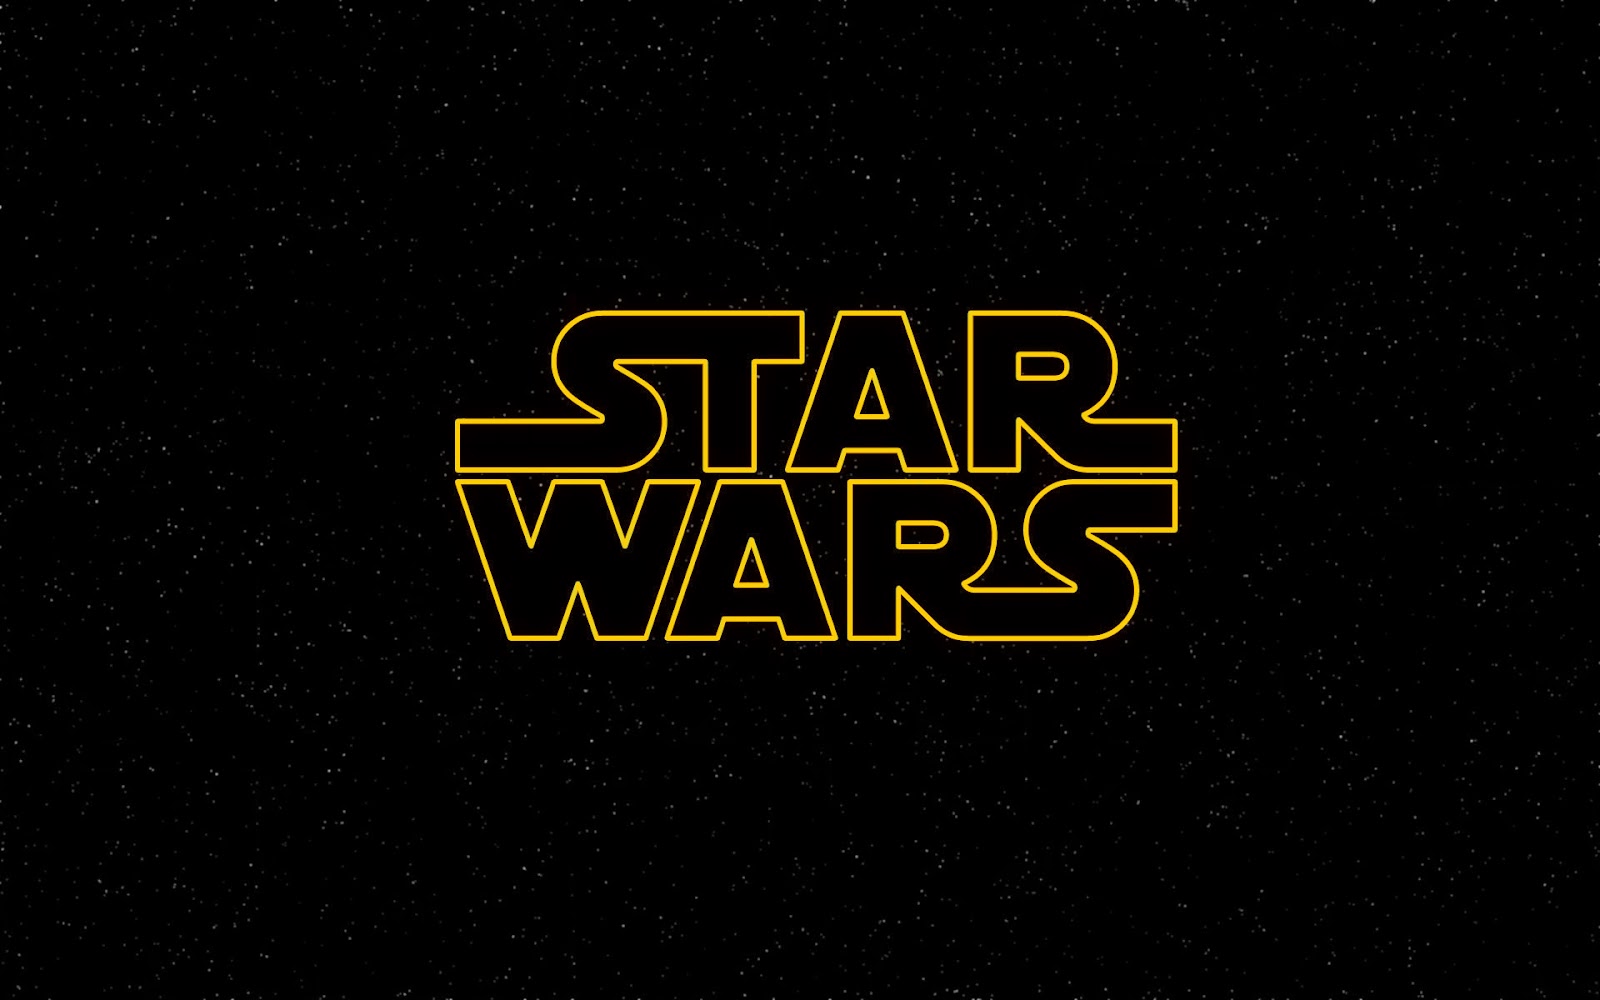 star-wars-logo-stars.jpg